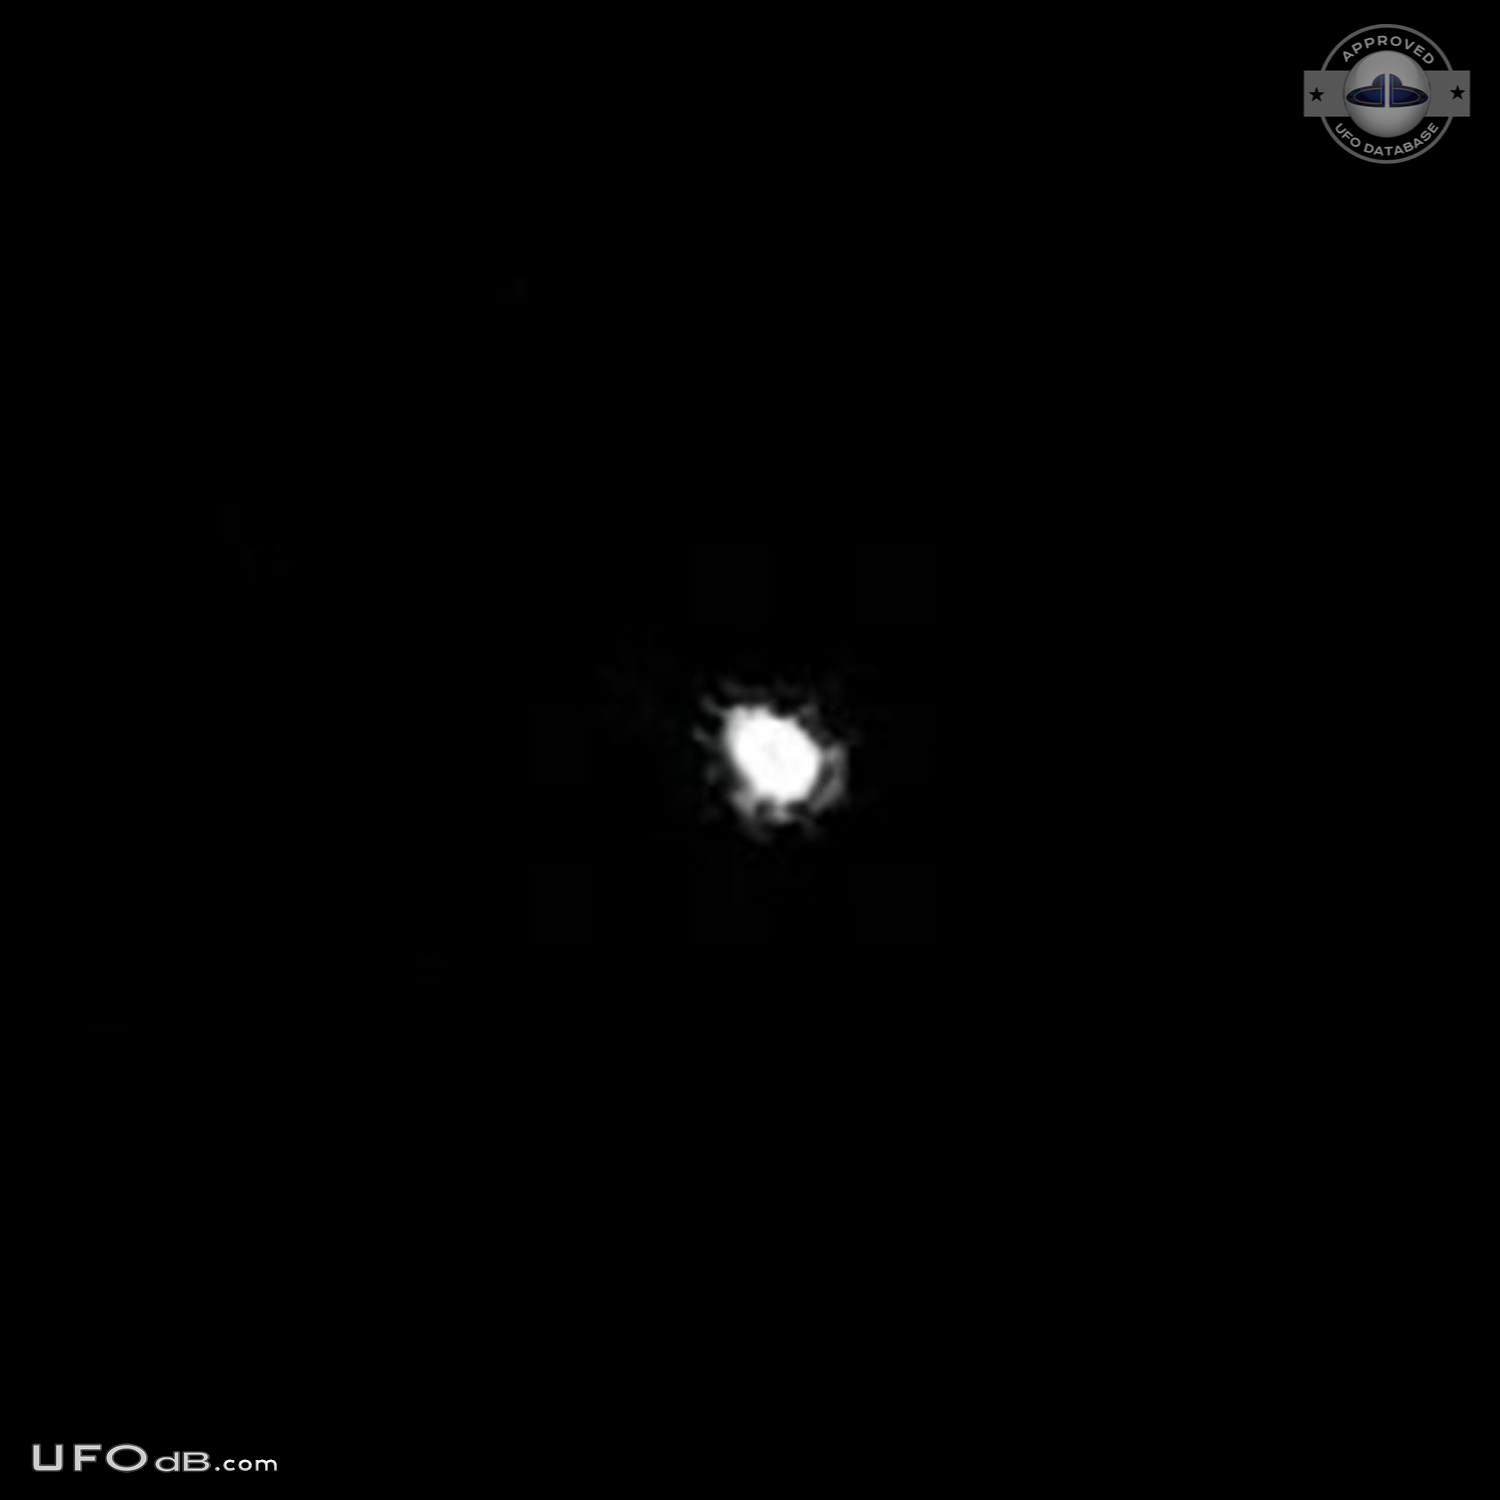 Super bright star turns out to be UFO - Kalama Washington USA 2015 UFO Picture #617-4